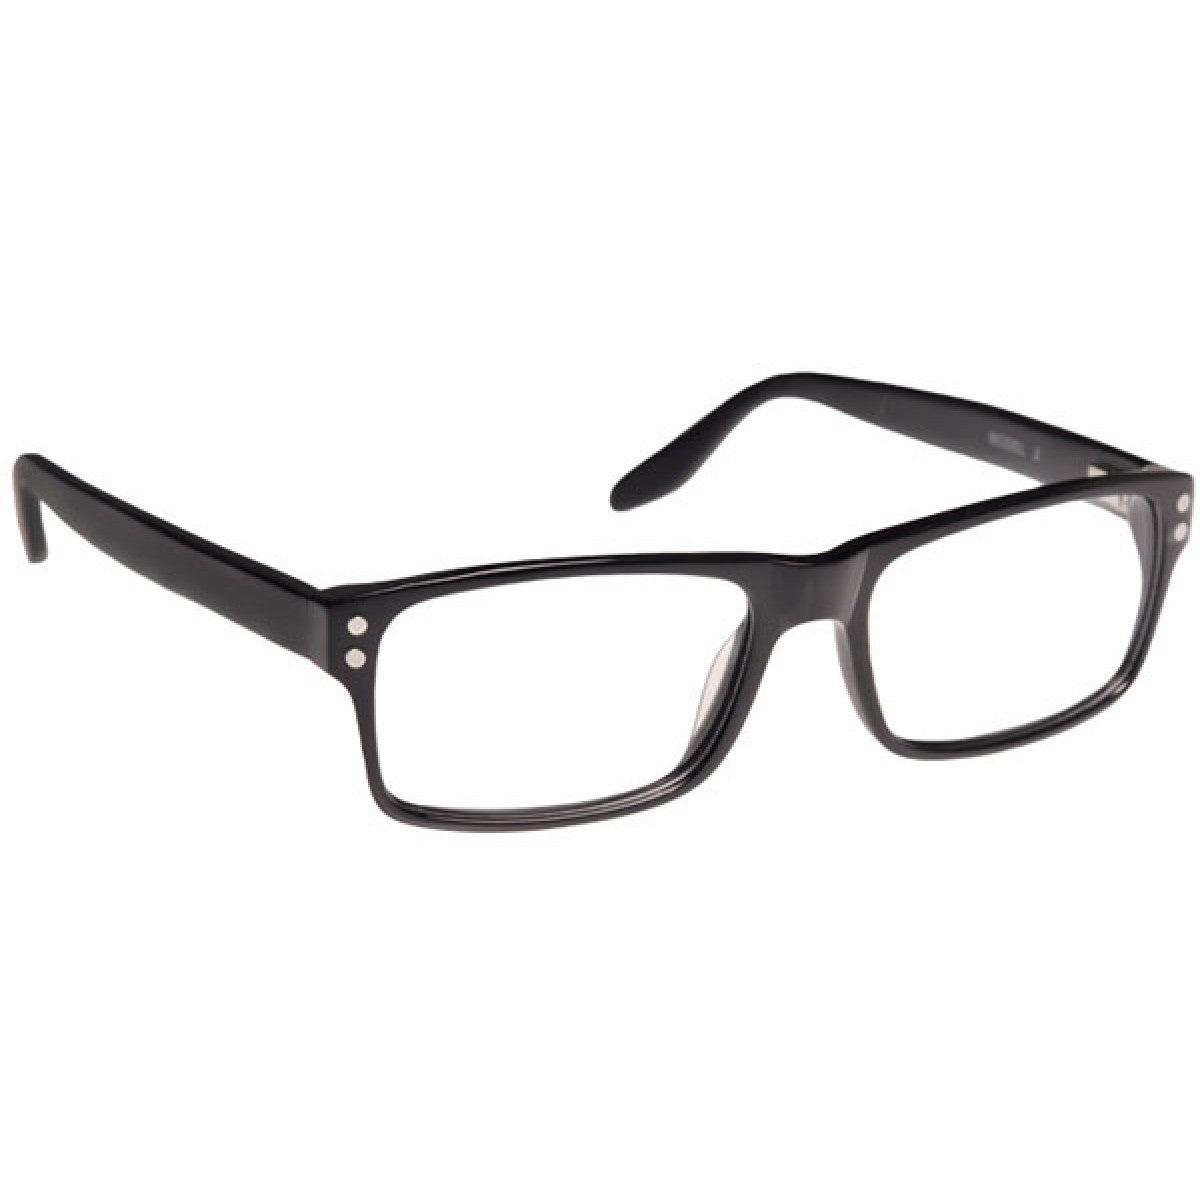 Armourx Prescription Safety Eyeglasses 7001